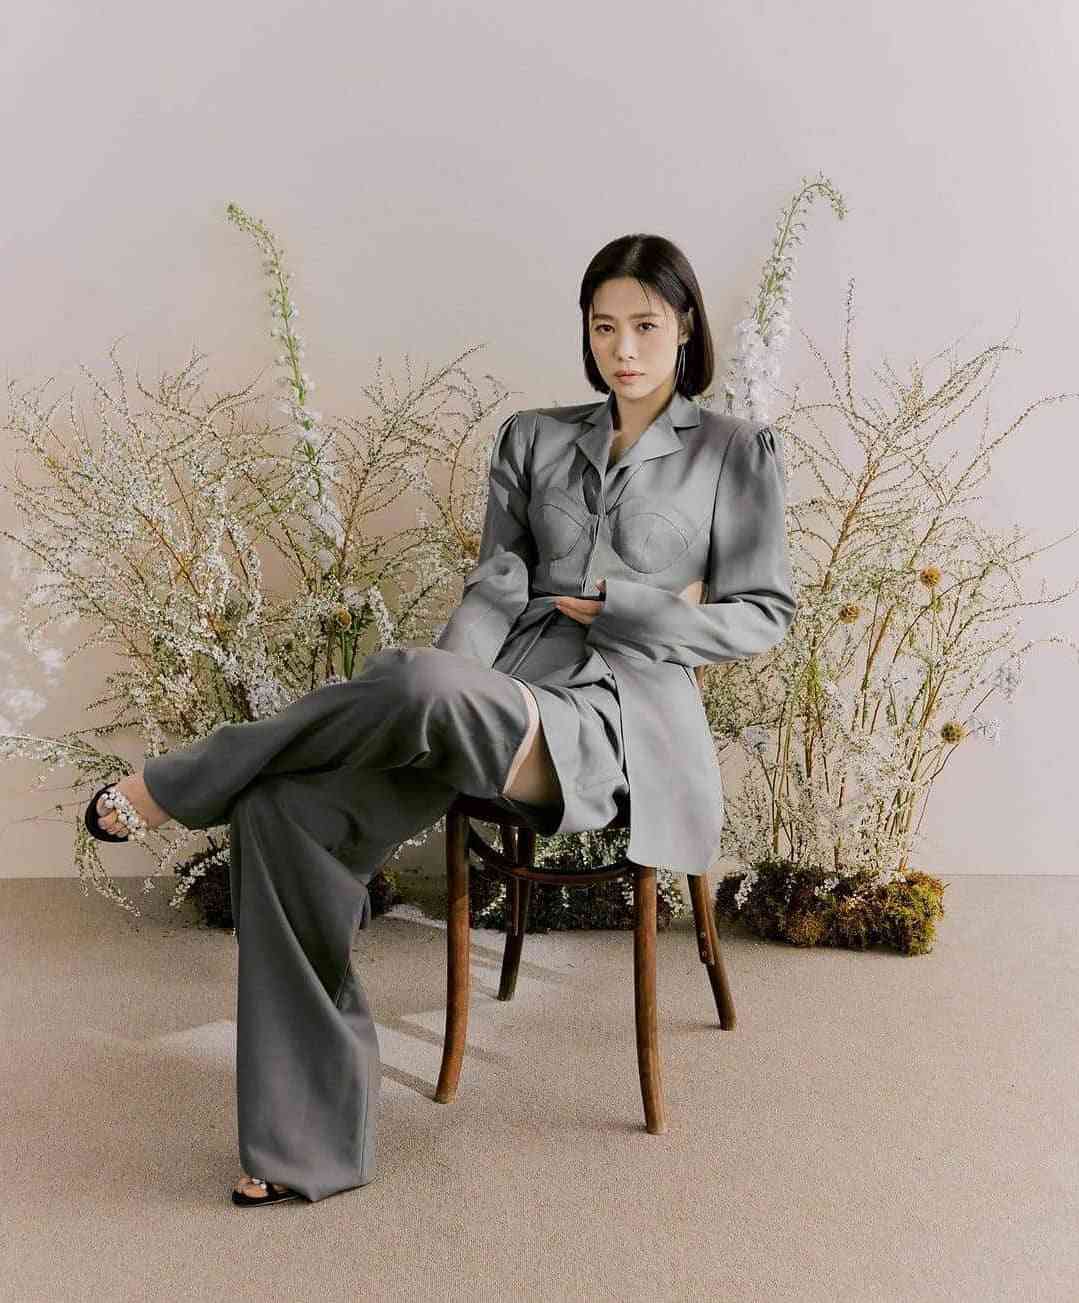 Kim Hyun Joo - Biography, Profile, Facts, and Career